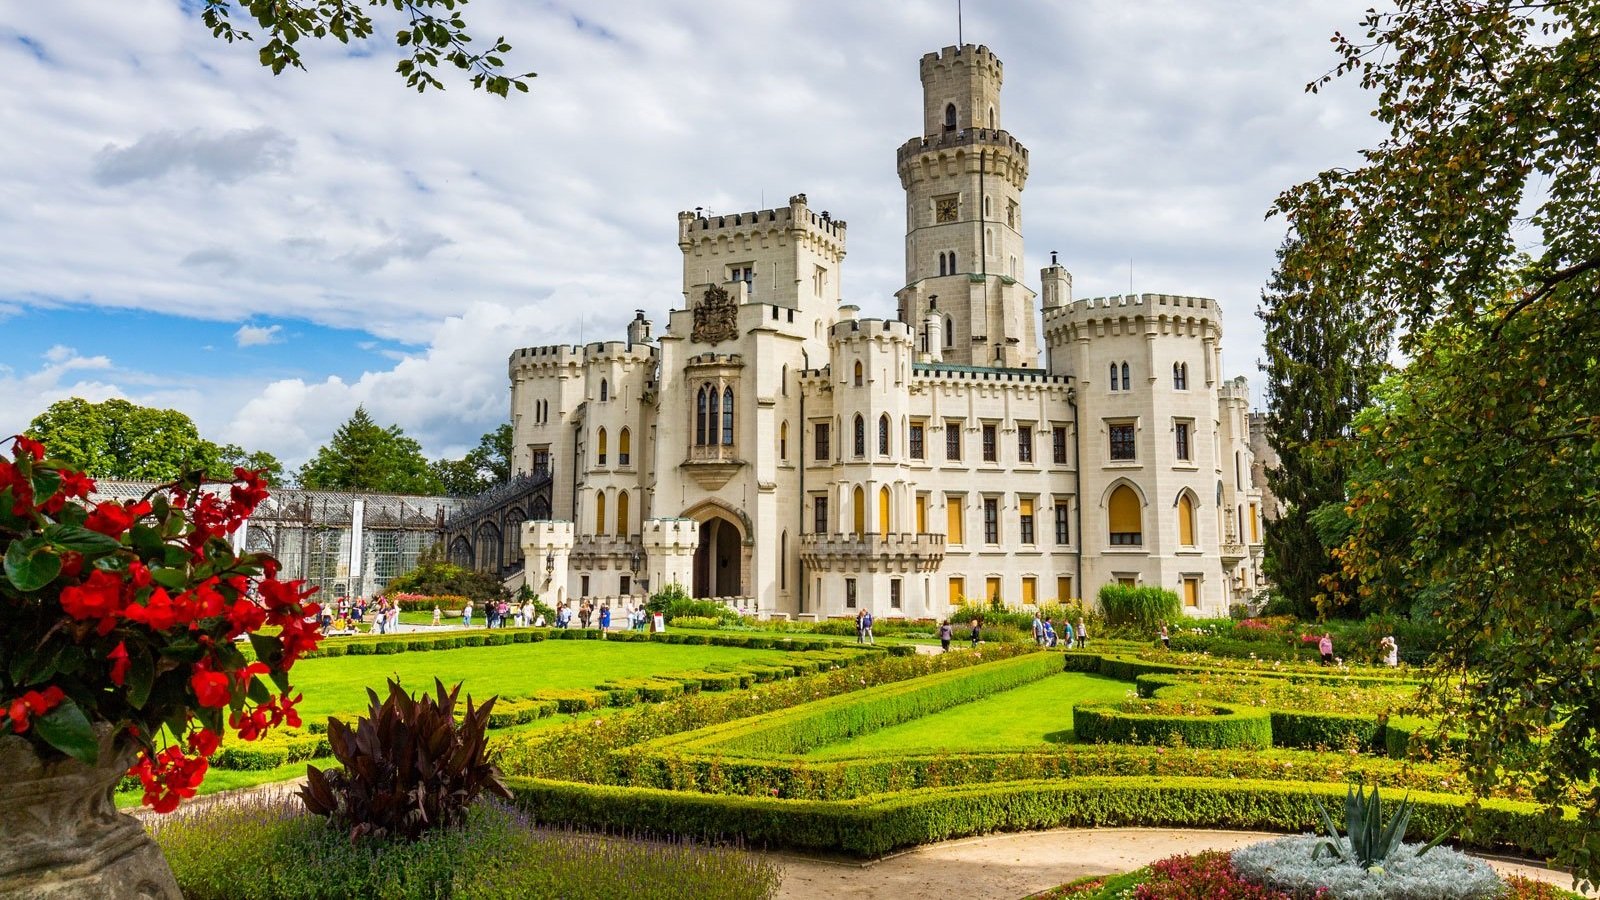 Hluboká Castle, a Romantic reinterpretation of Windsor Castle